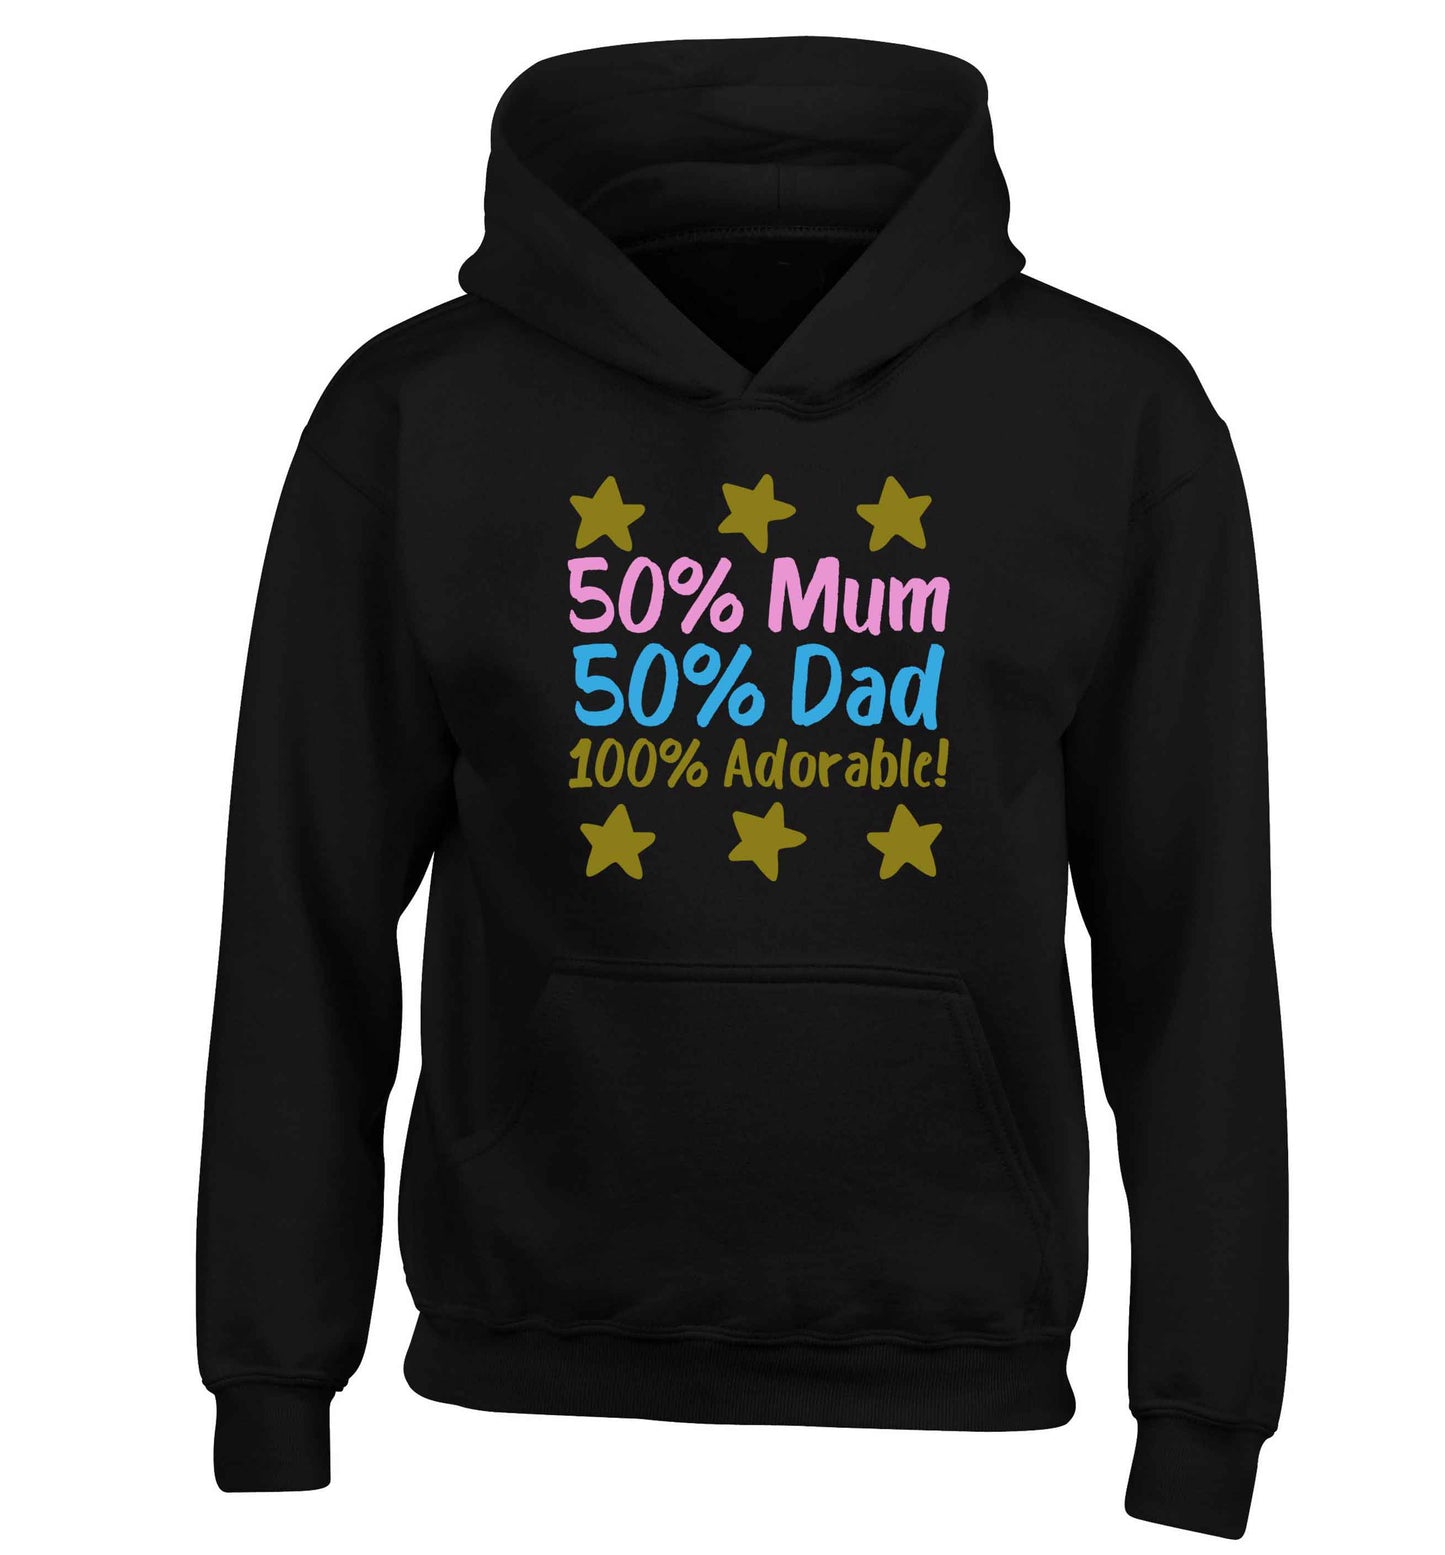 50% mum 50% dad 100% adorable children's black hoodie 12-13 Years